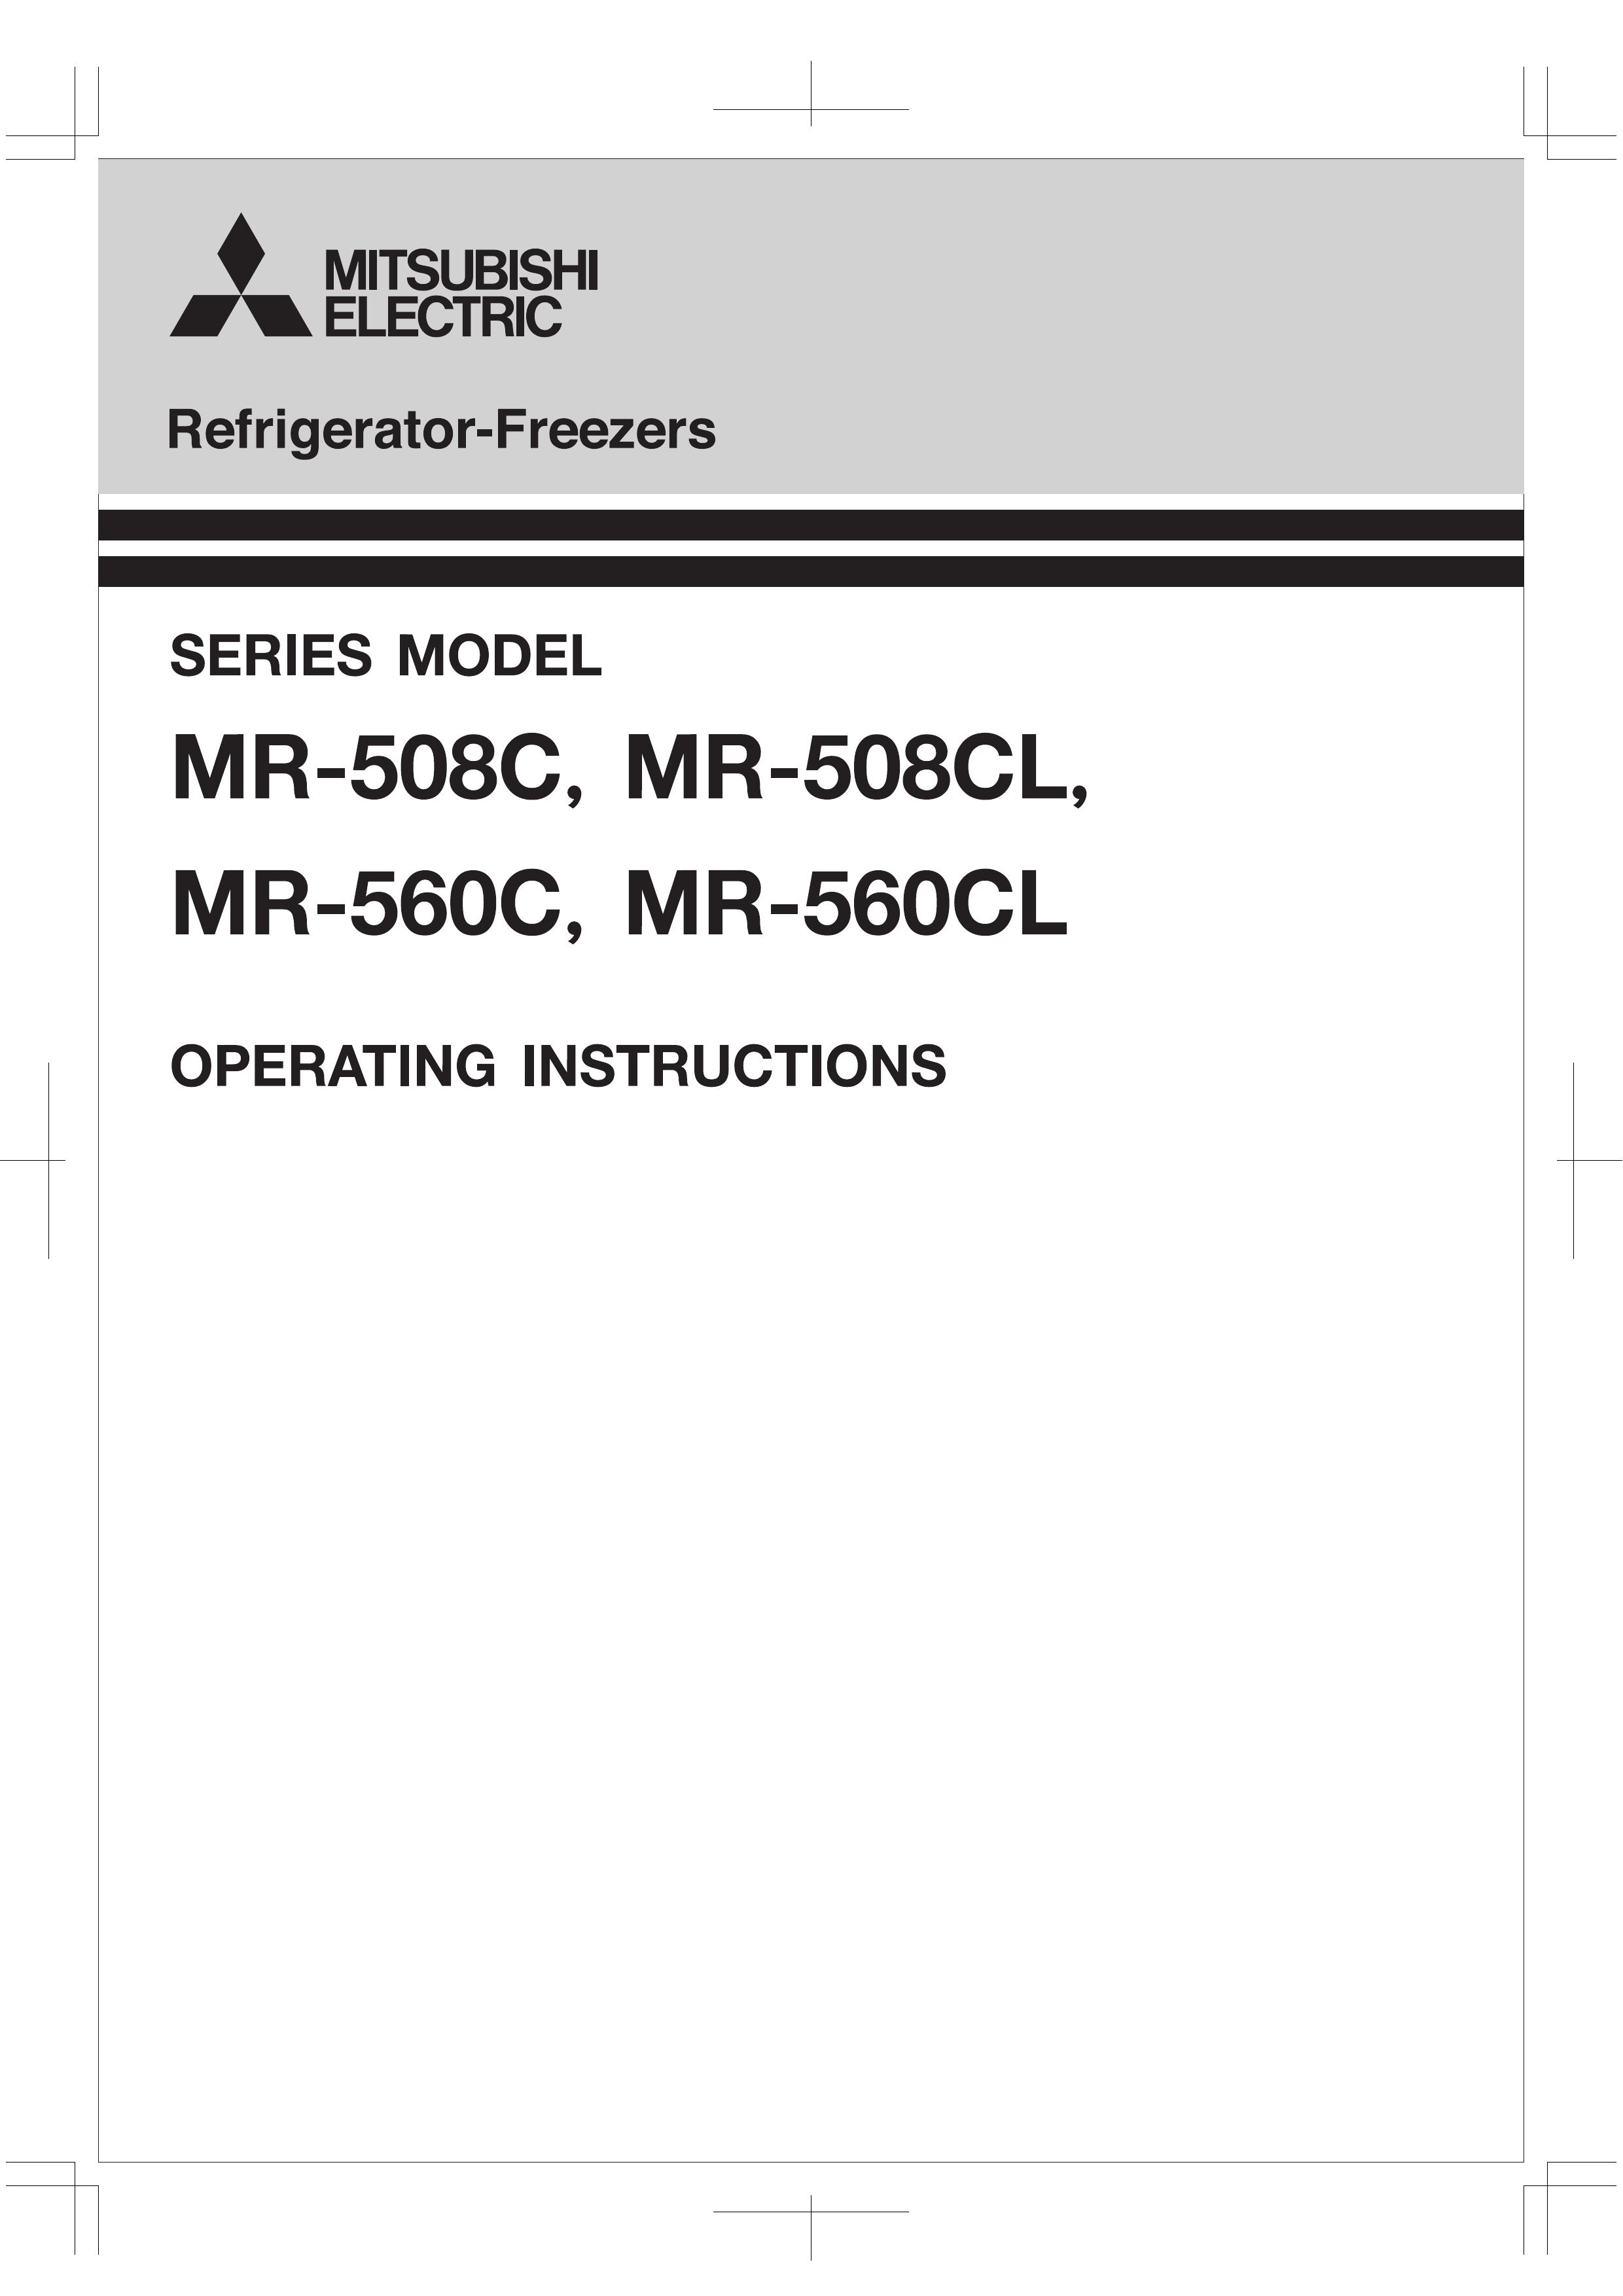 Mitsubishi Electronics MR-560CL Refrigerator User Manual